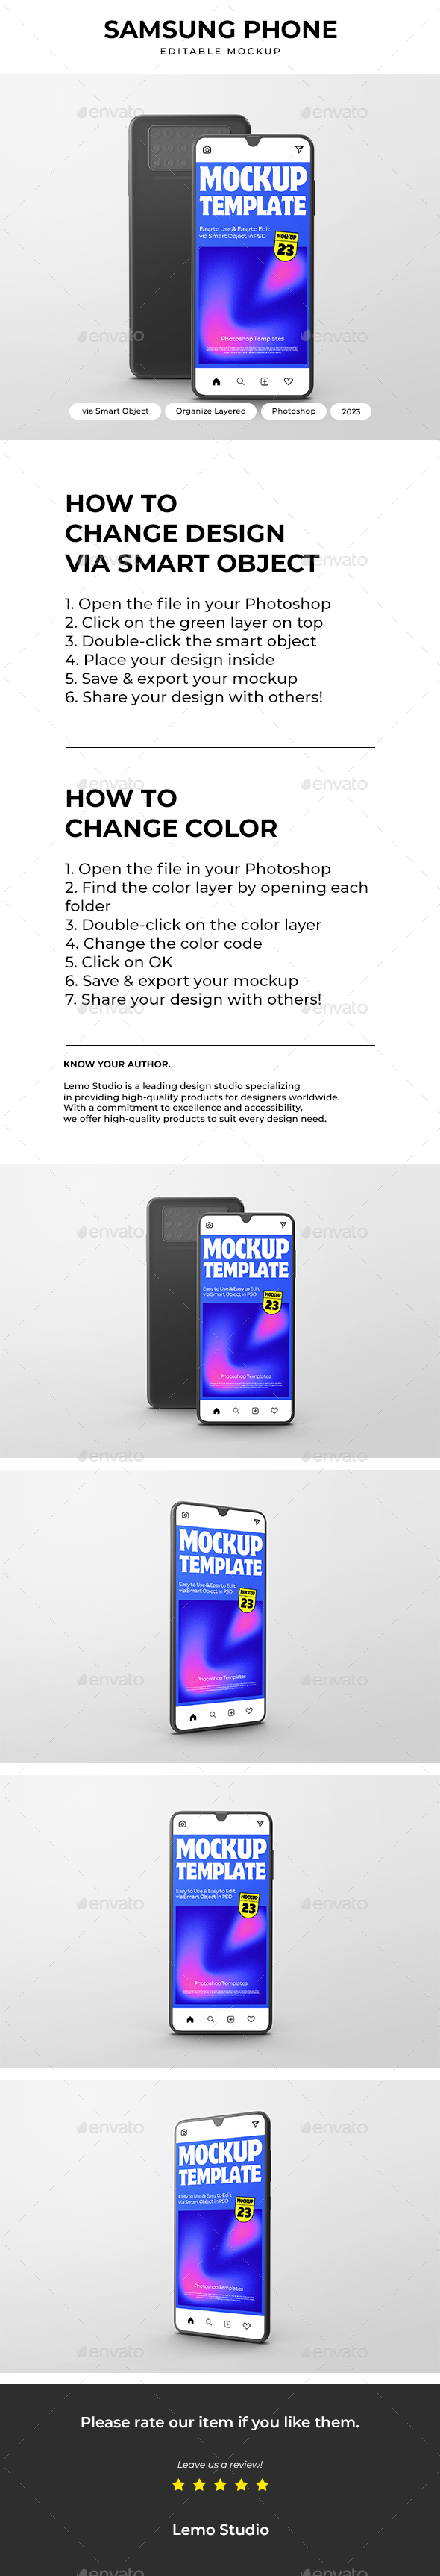 Samsung Phone Mockup